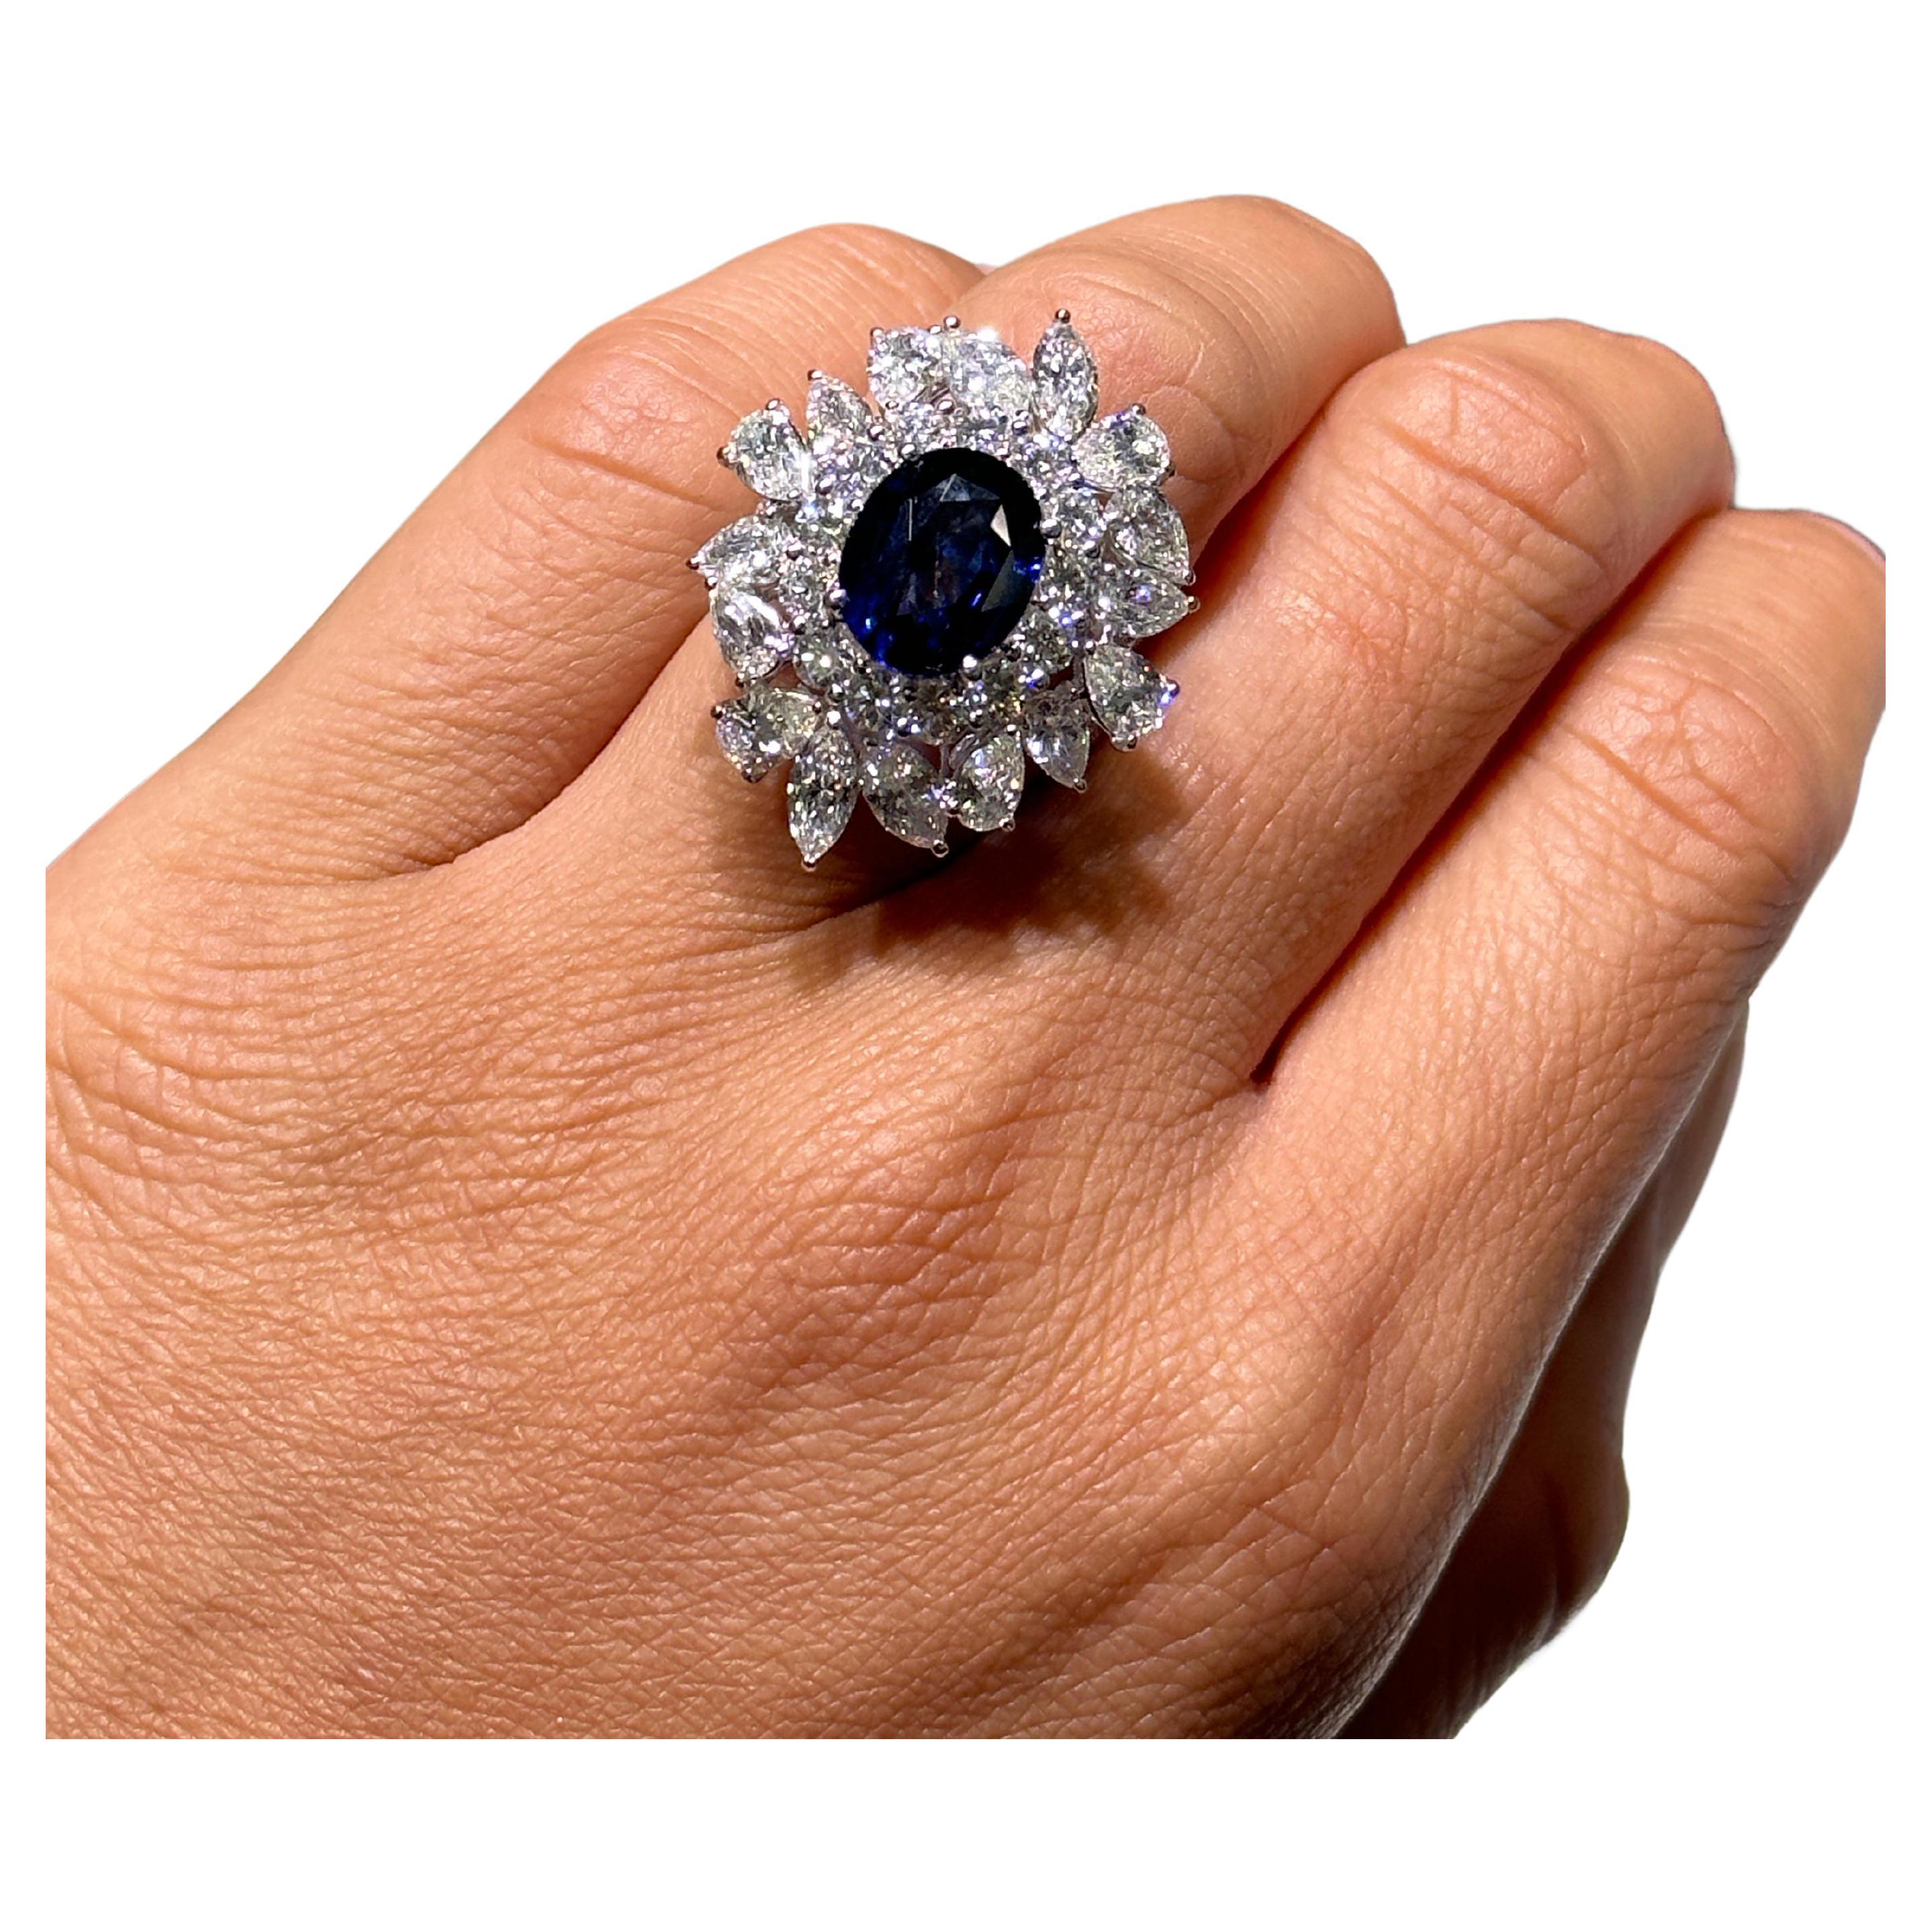 NWT $150, 000 18KT Gold Rare Gorgeous 10.75CT Ceylon Blue Sapphire Diamond Ring